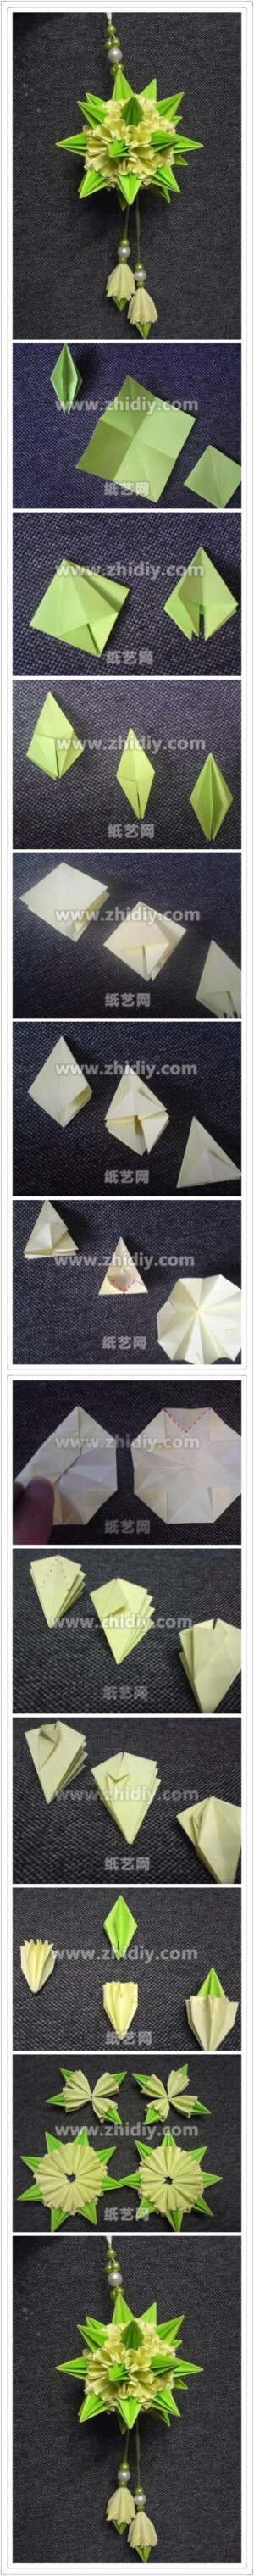 折纸花球教程图解